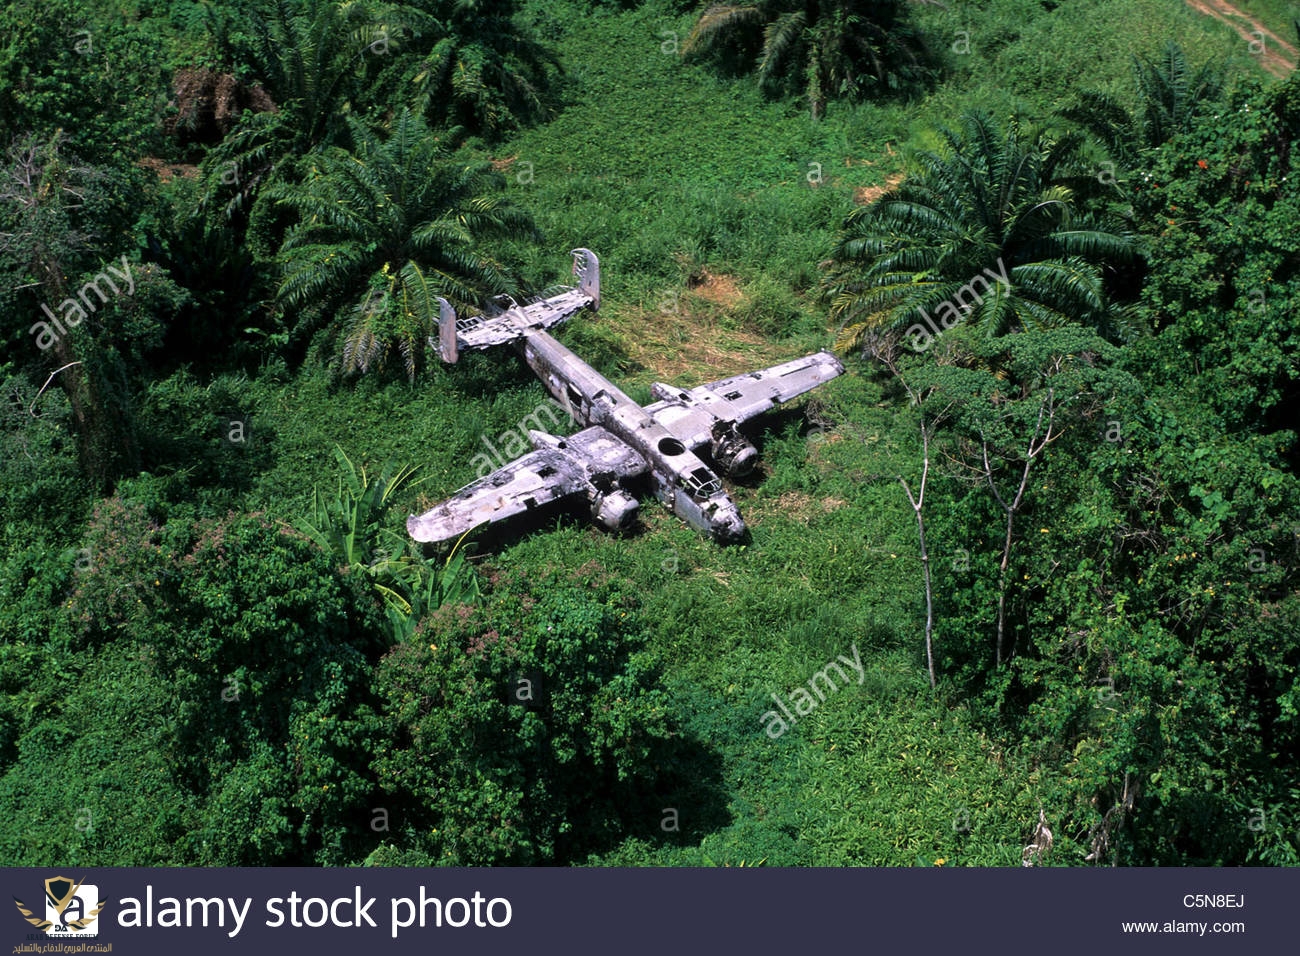 plane-wreck-near-talasea-west-new-britain-papua-new-guinea-C5N8EJ.jpg